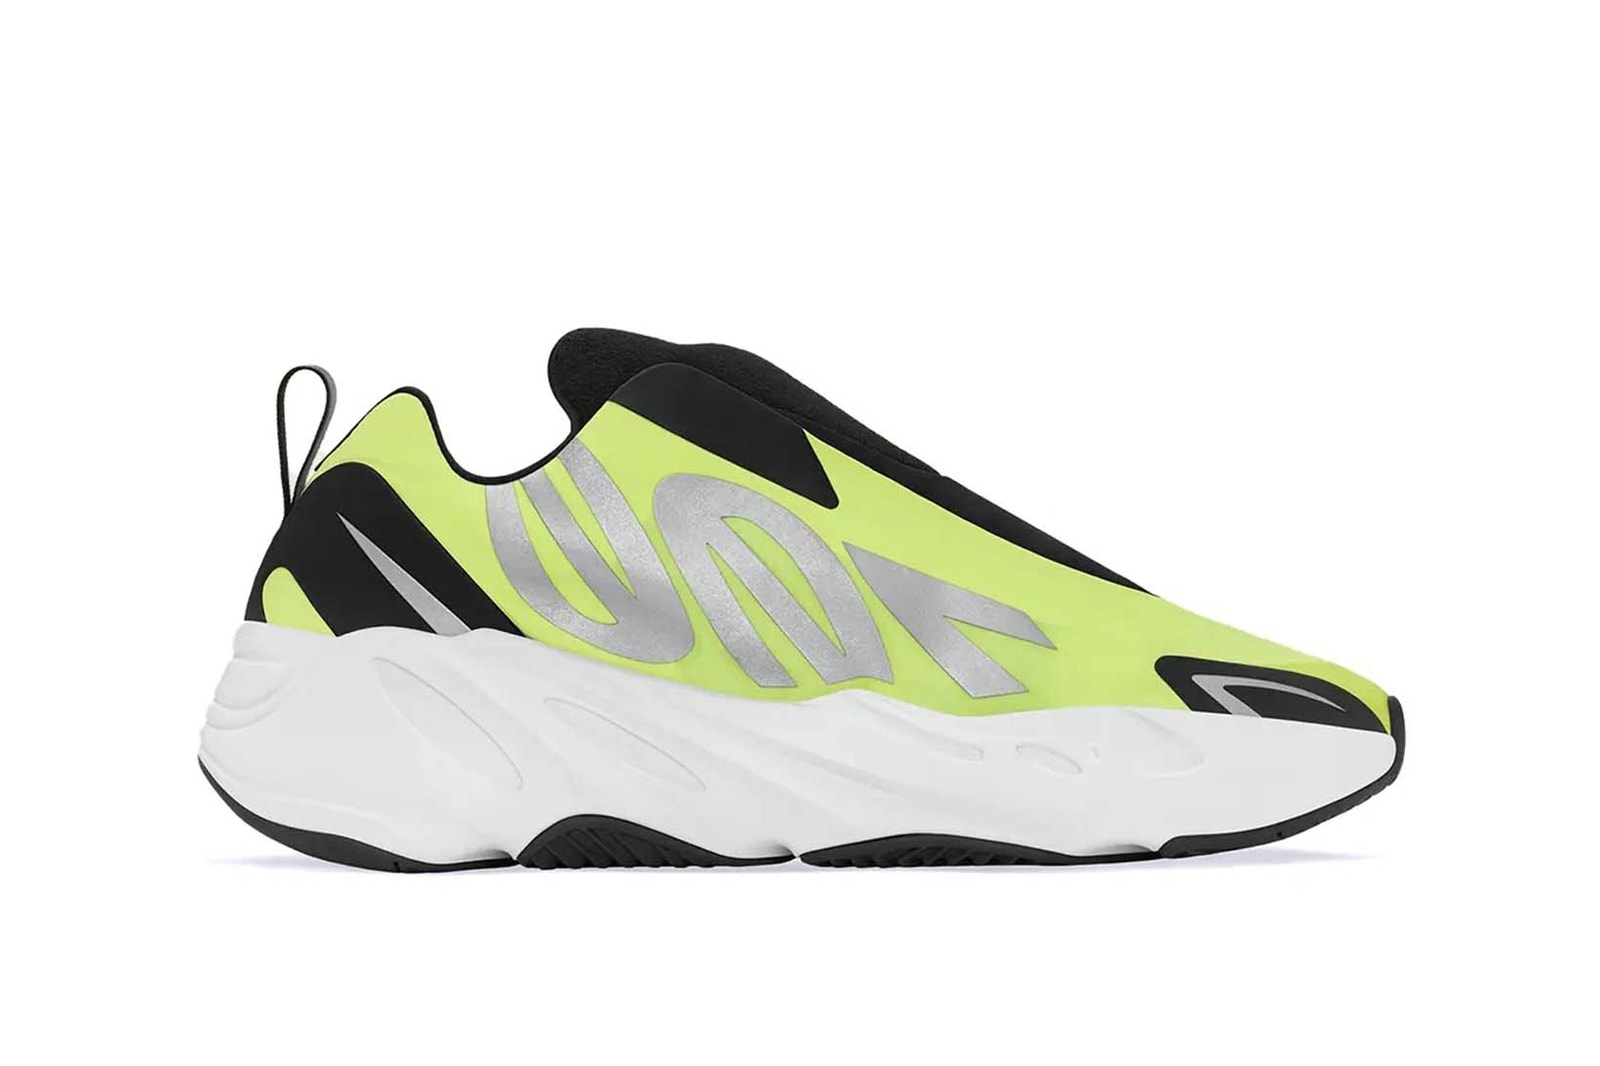 Sneaker Release Calendar Release Info adidas Yeezy Nike Air Jordan Converse Reebok Release Info Price Collaborations